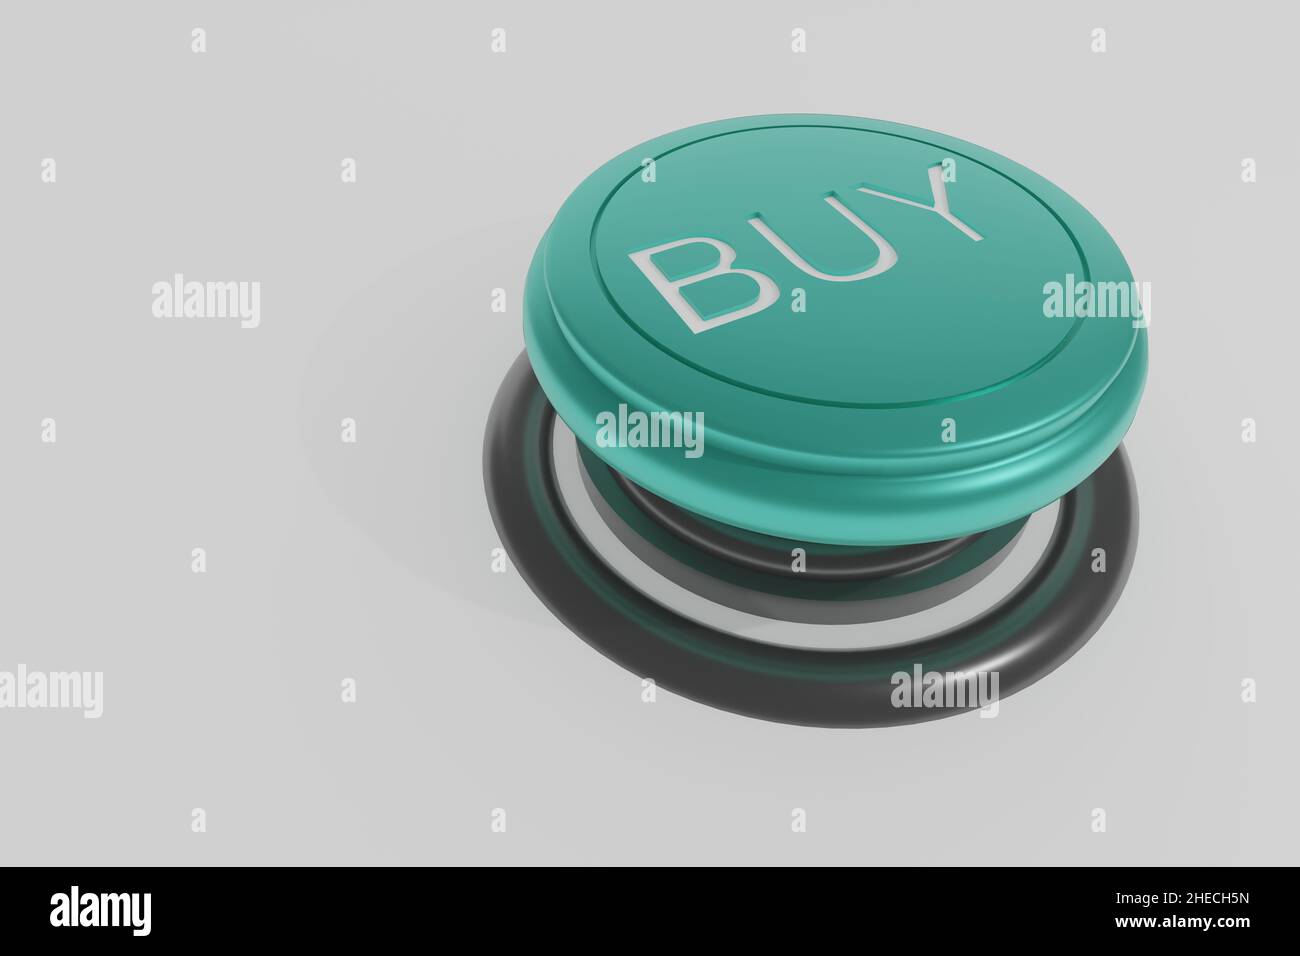 buy button Stock Photo